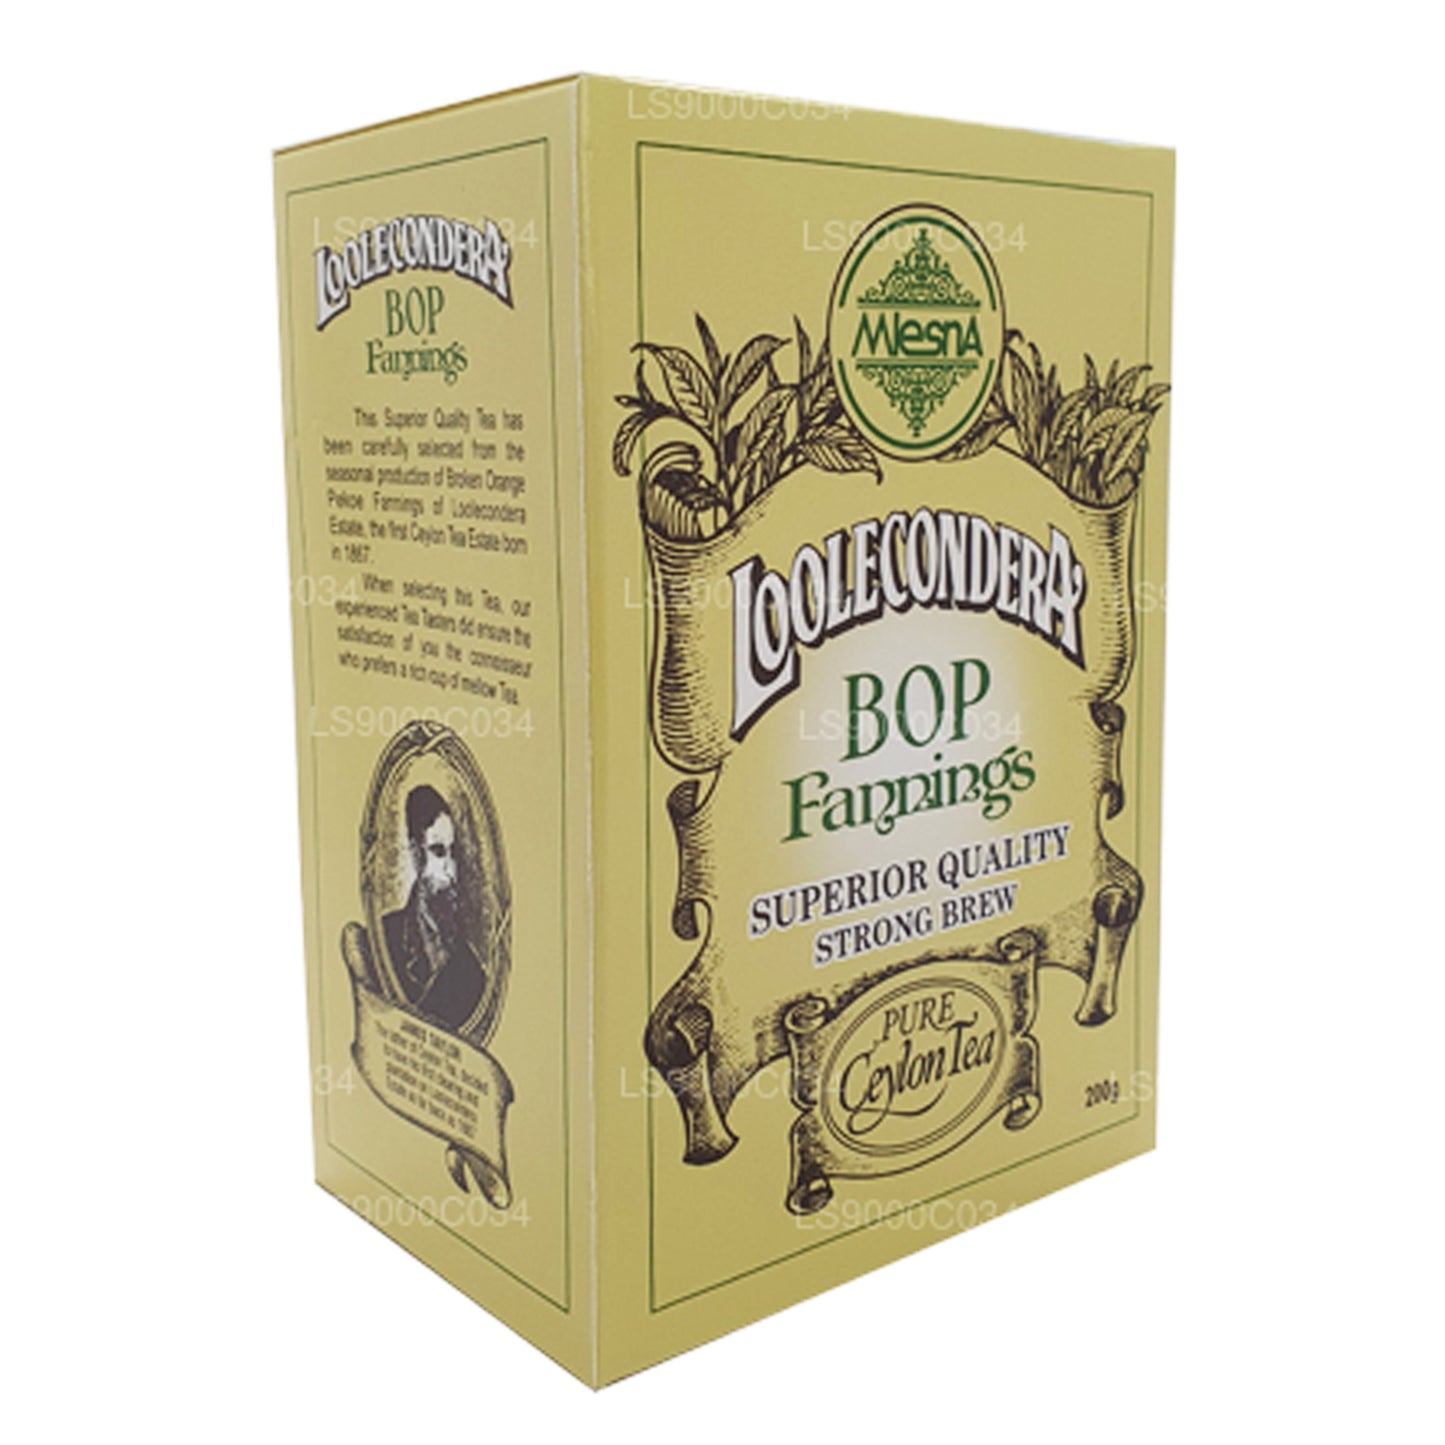 Mlesna Loolecondera BOP Fannings Strong Brew Herbata sypka (200g)